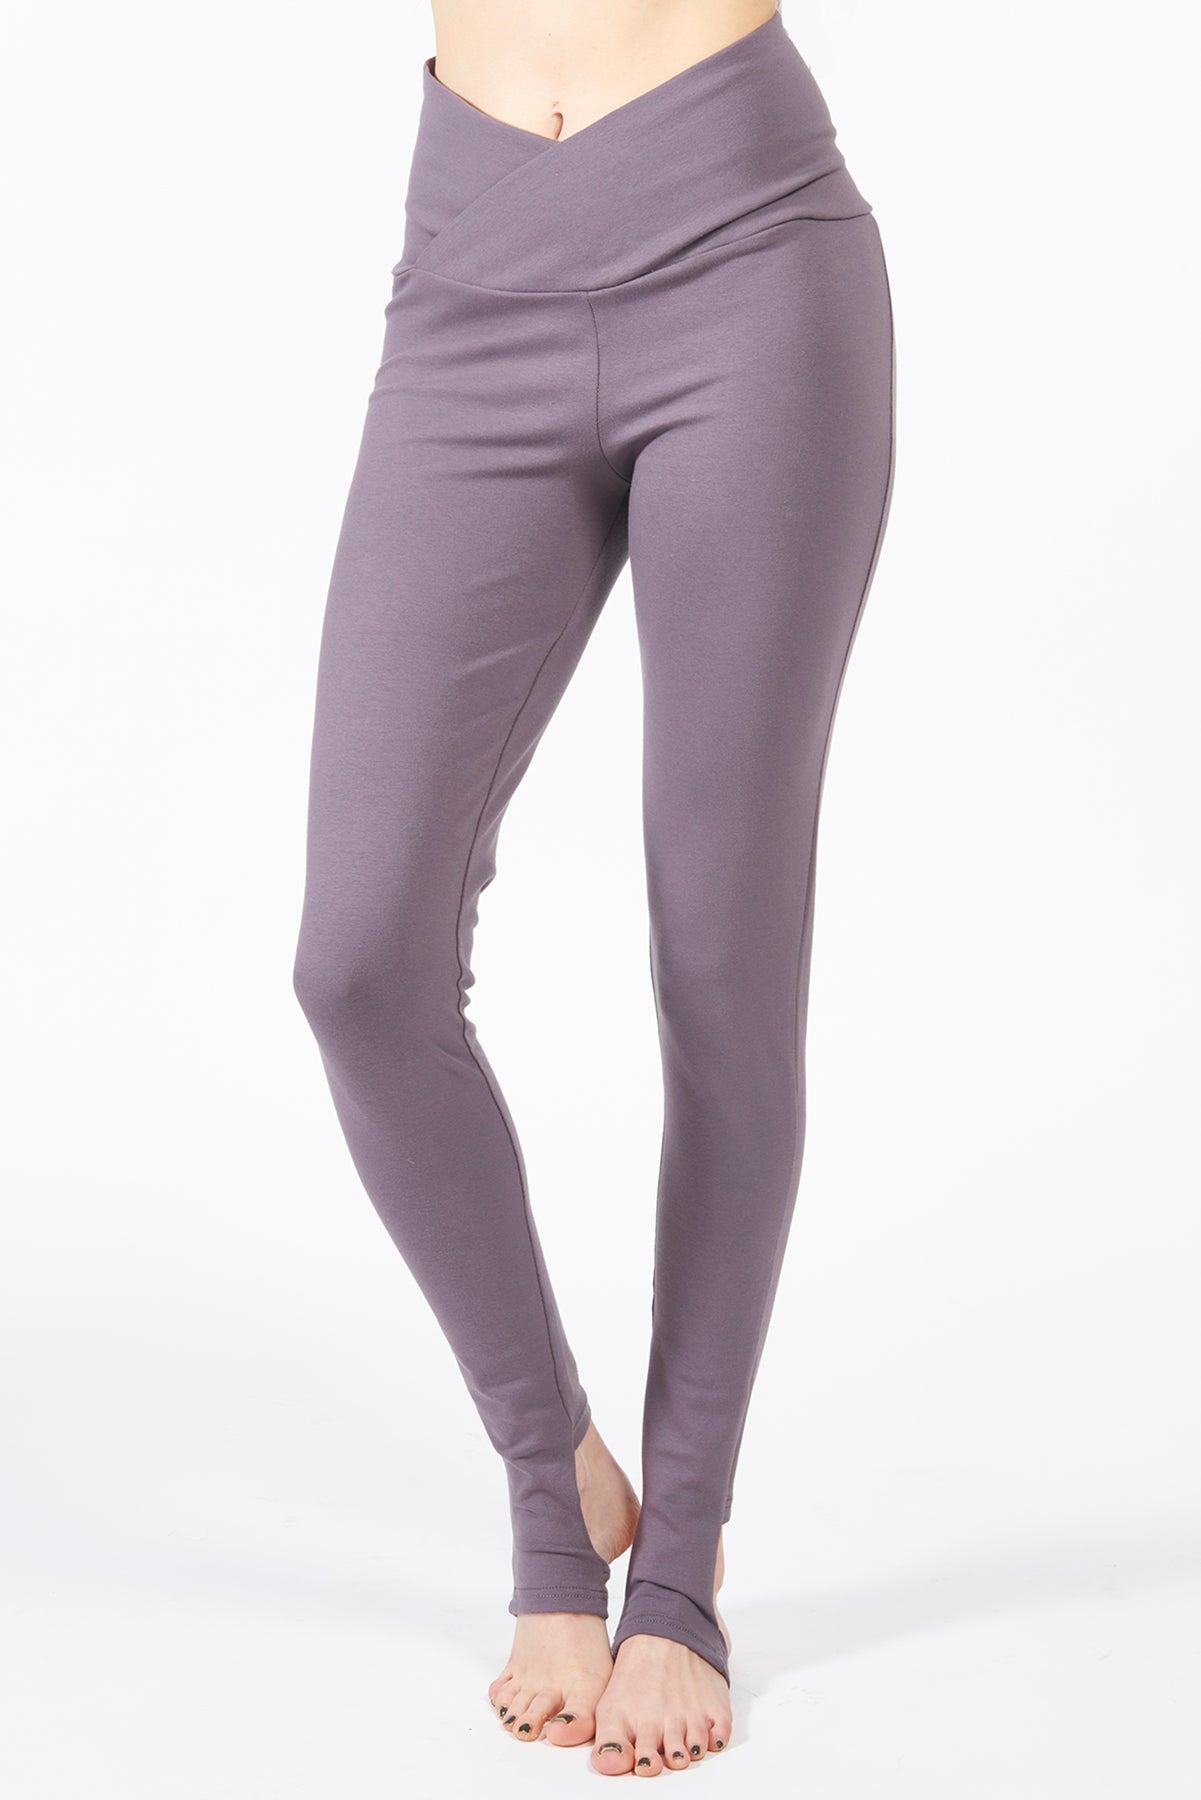 Buy Zeronic Women's High Waist Stirrup Leggings Tights Gym Workout Yoga  Pants (Black, X-Small) at Amazon.in